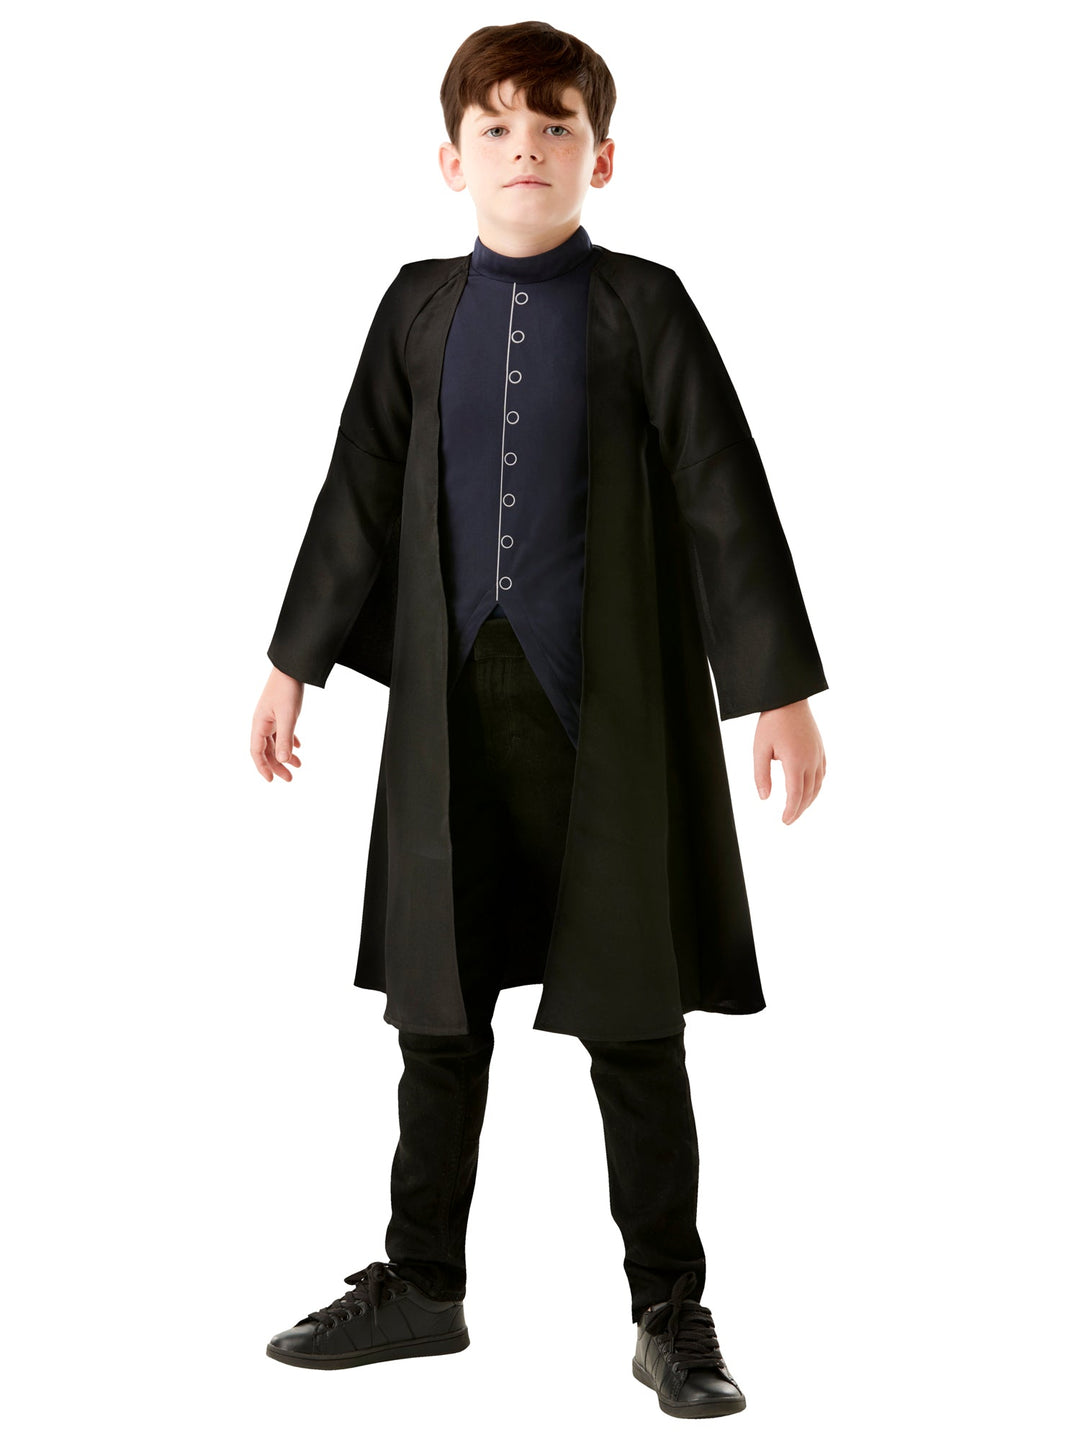 Severus Snape Costume Child Black Robe Harry Potter Teacher